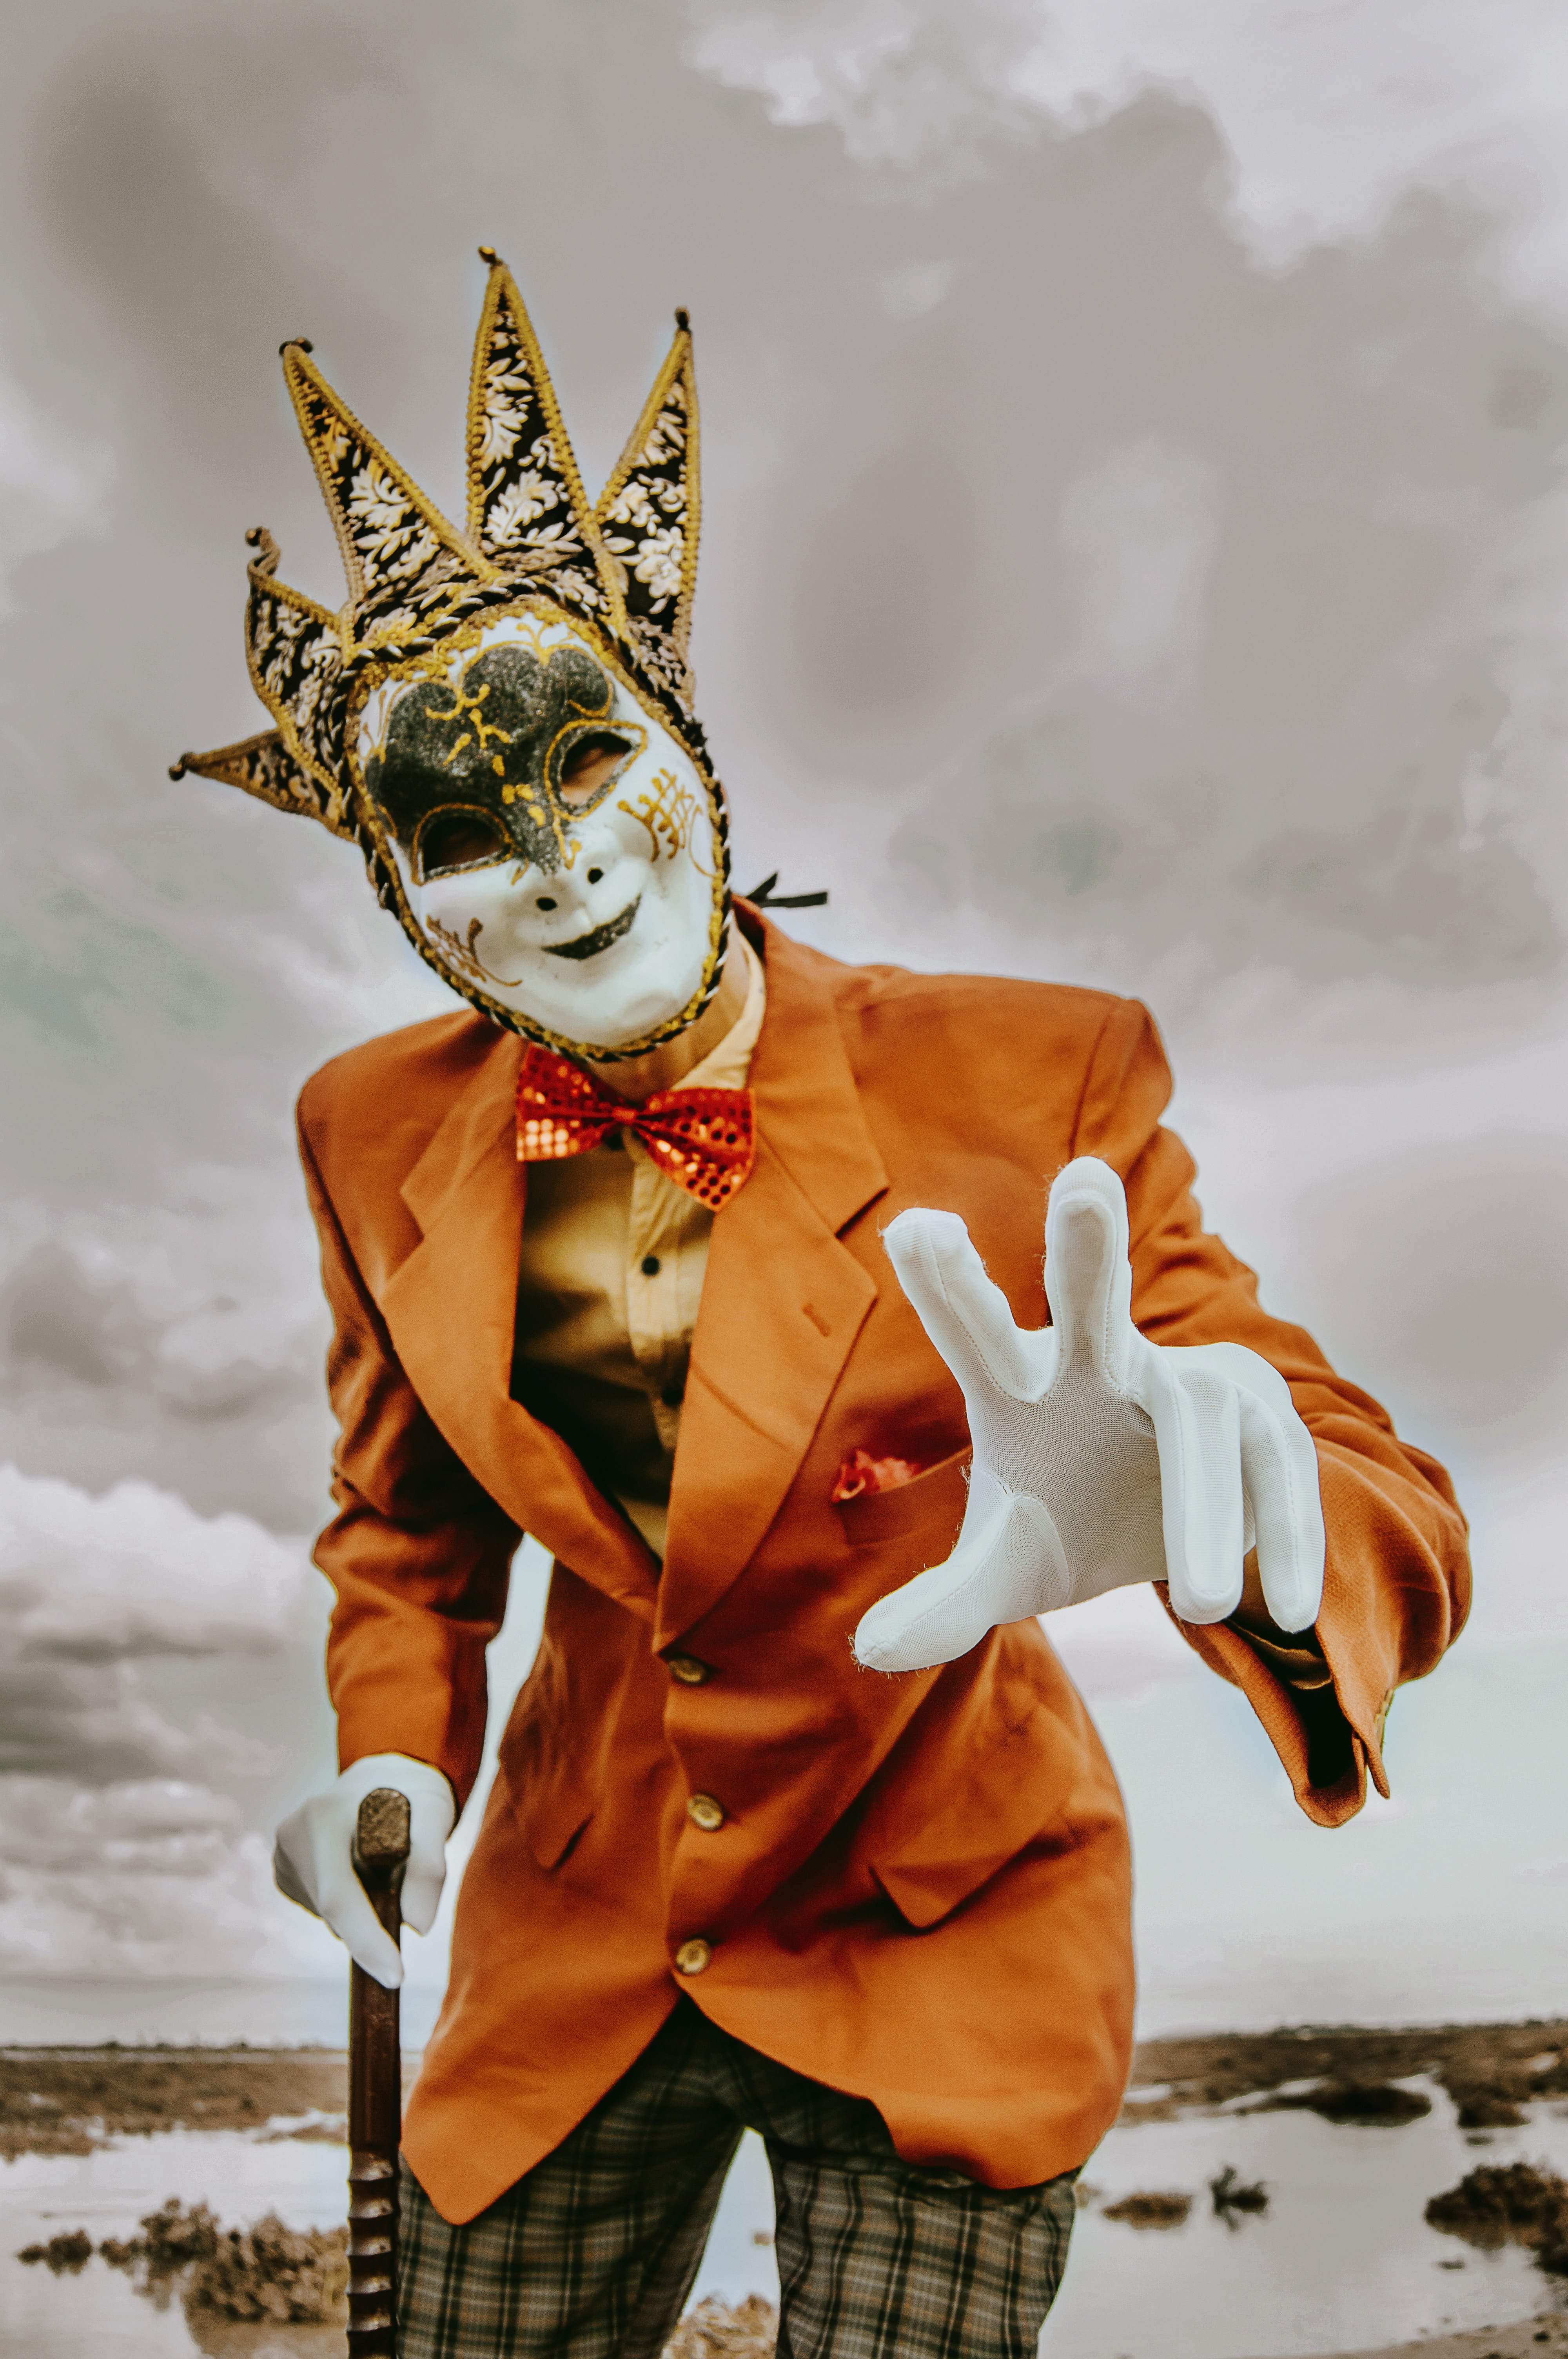 mask, miscellanea, miscellaneous, holiday, human, person, costume, carnival